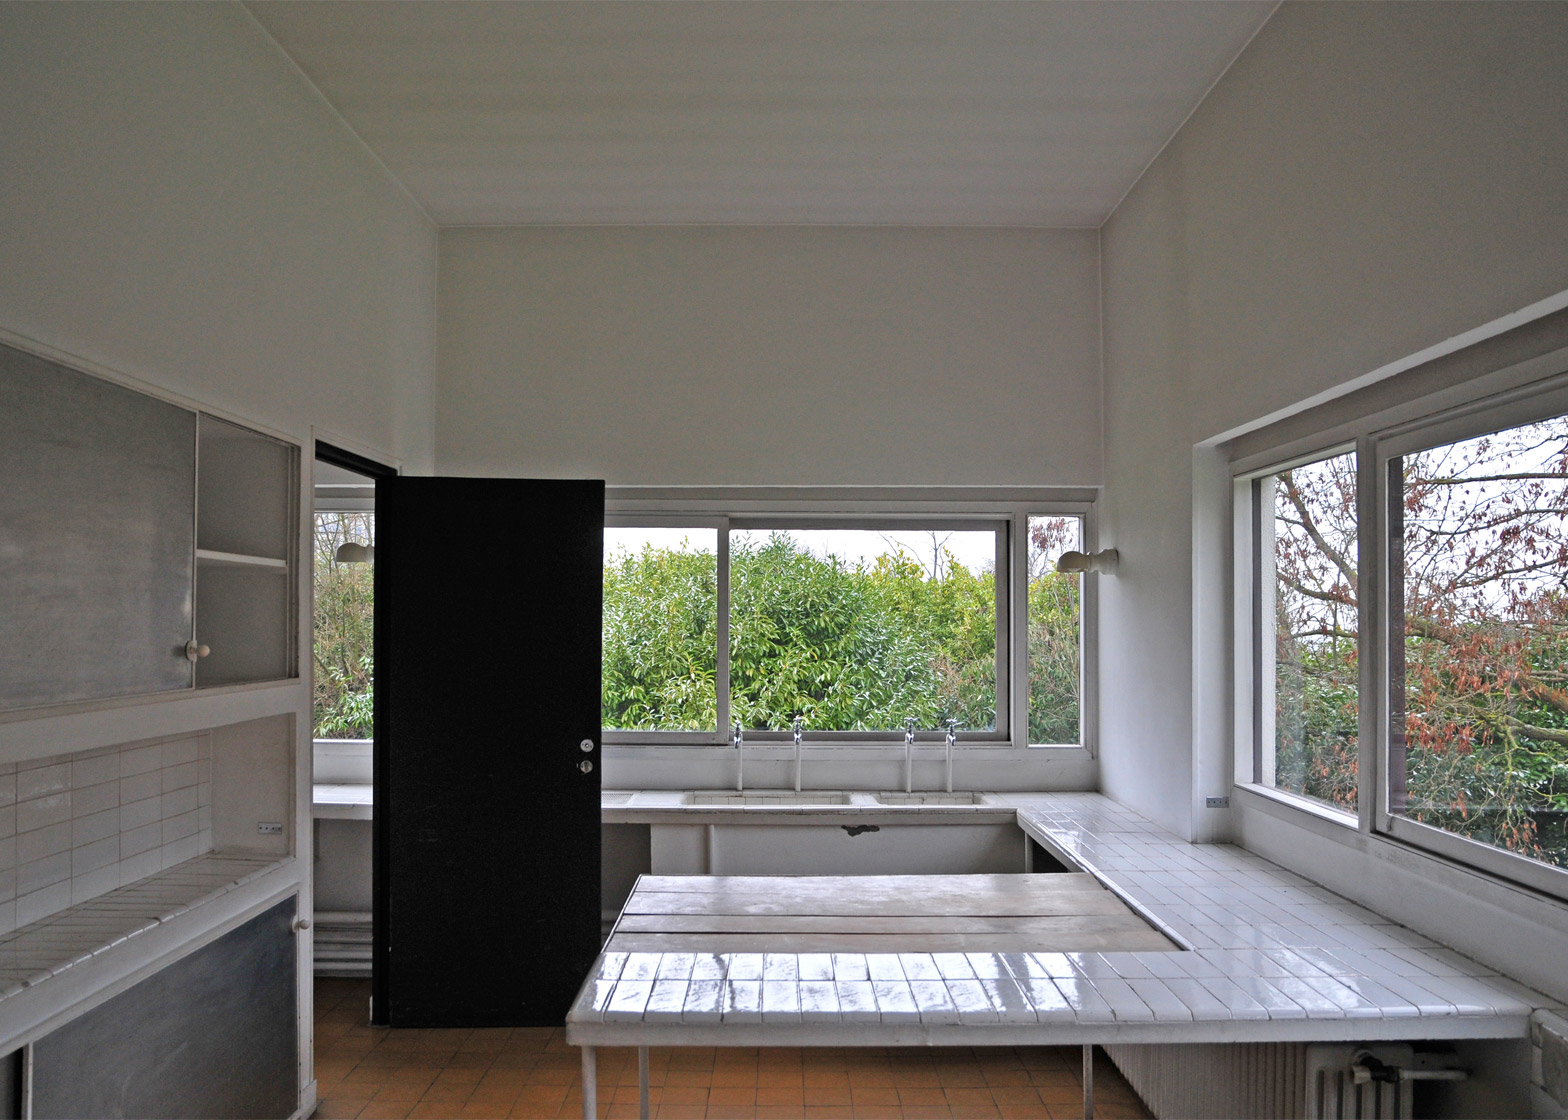 Le Corbusier S Villa Savoye Encapsulates The Modernist Style